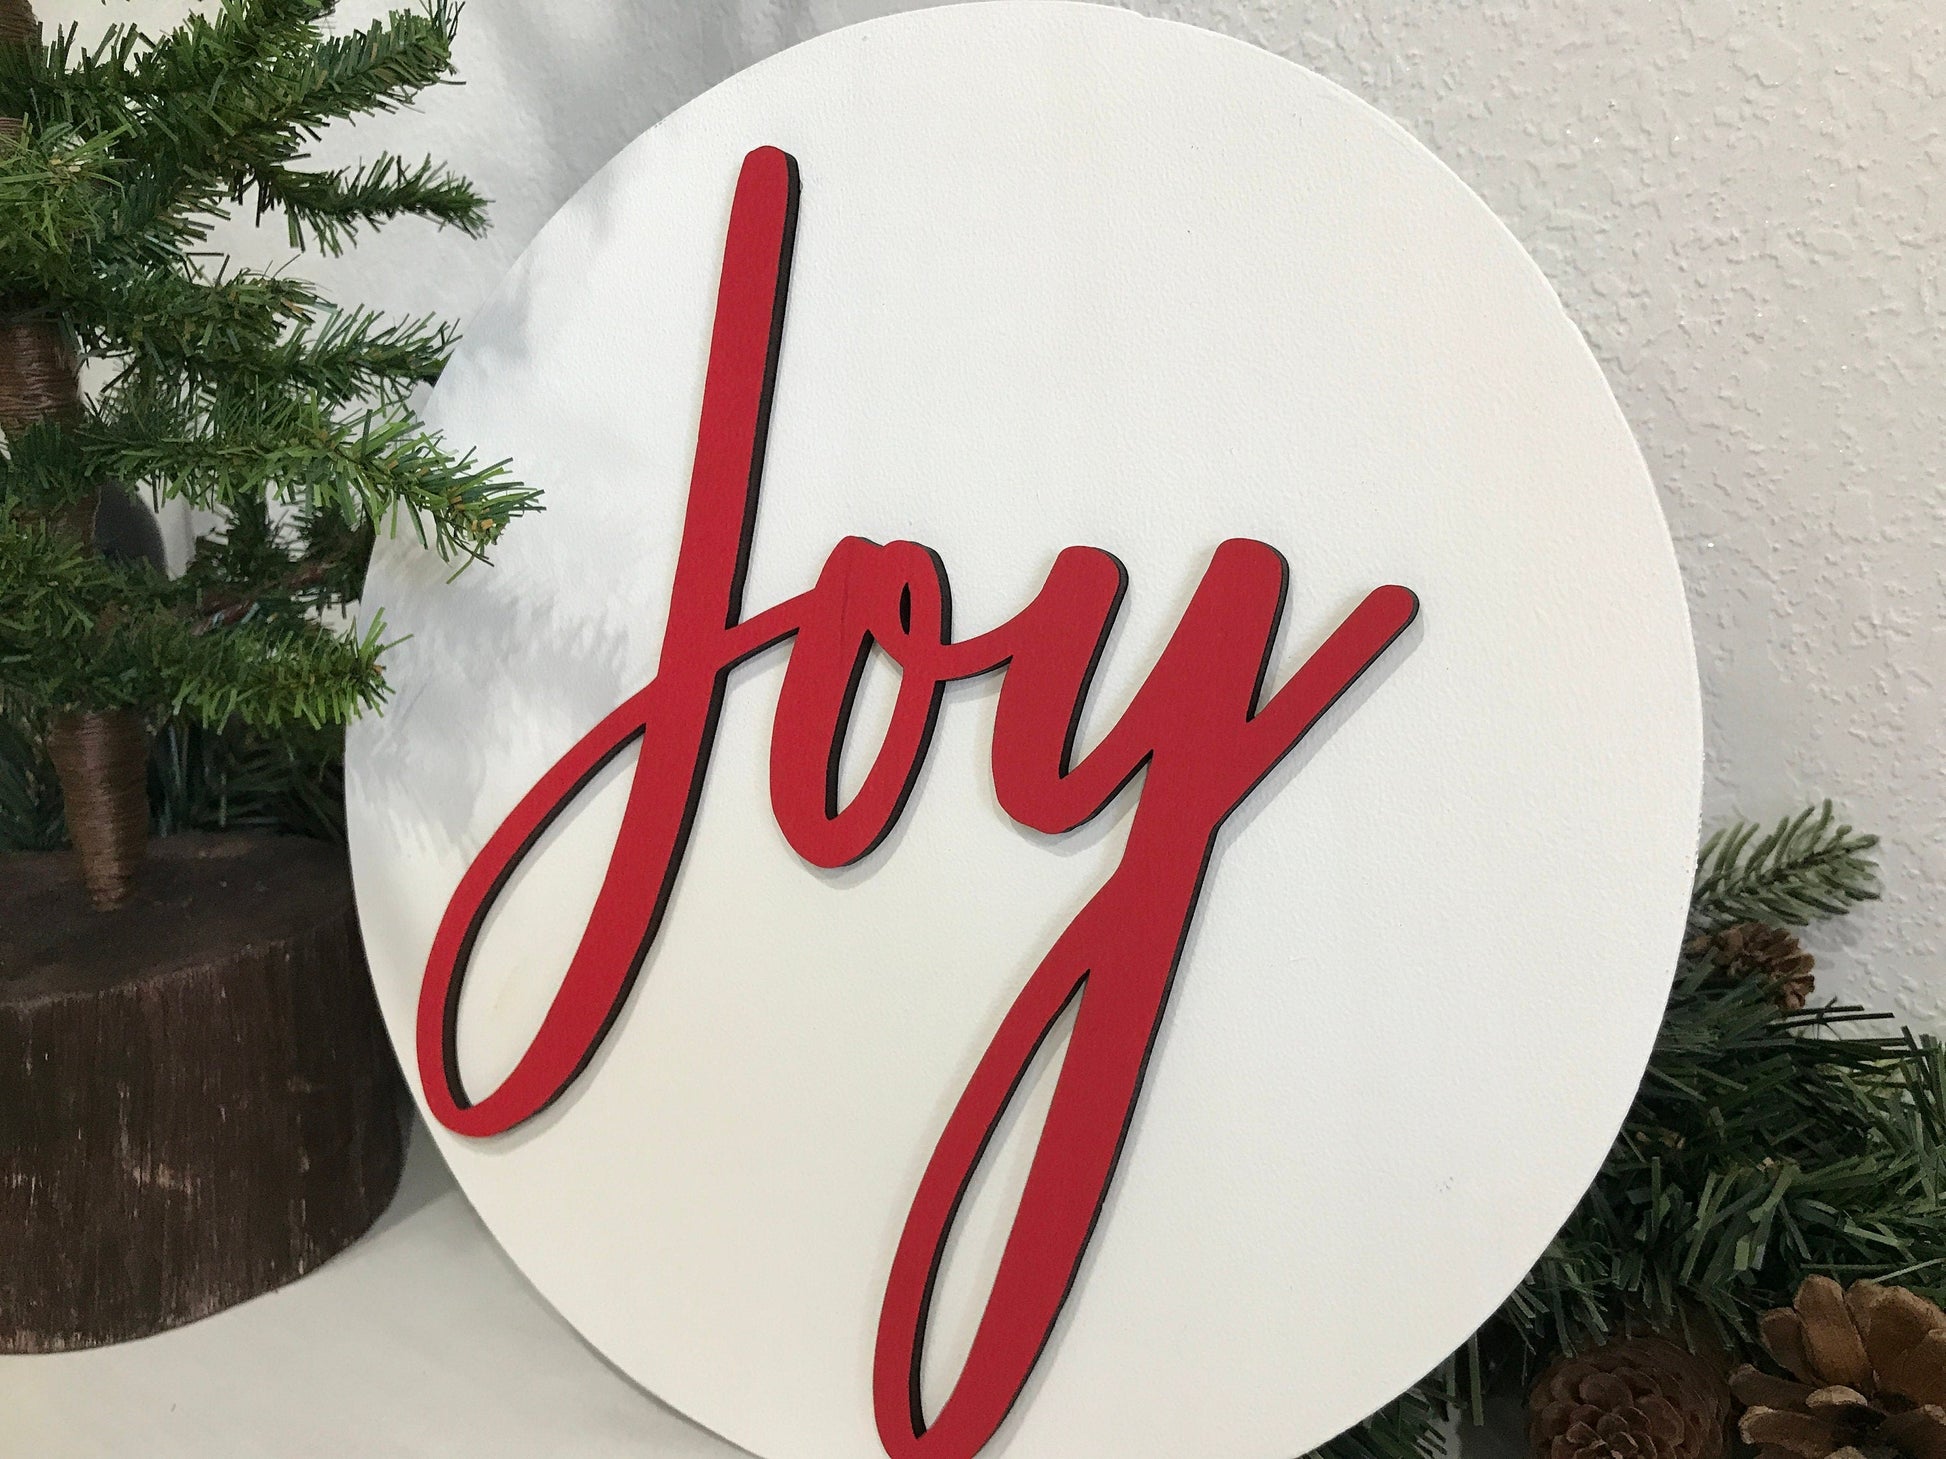 Joy Holiday Sign